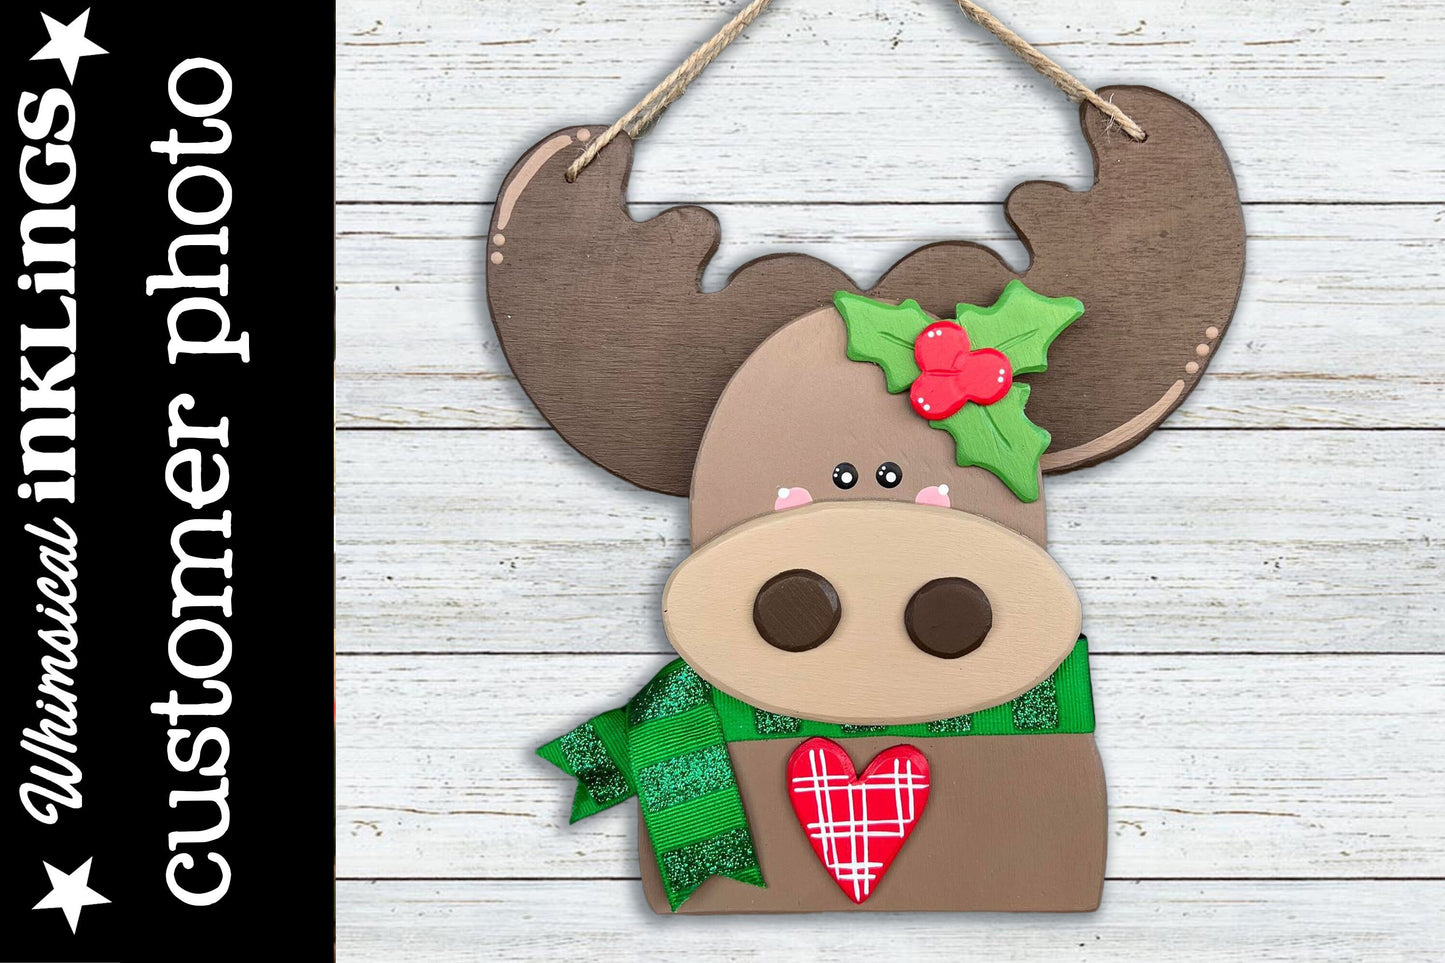 Christmas Moose Ornament SVG| Laser Cut Moose Ornament| Glowforge|Christmas Ornament SVG